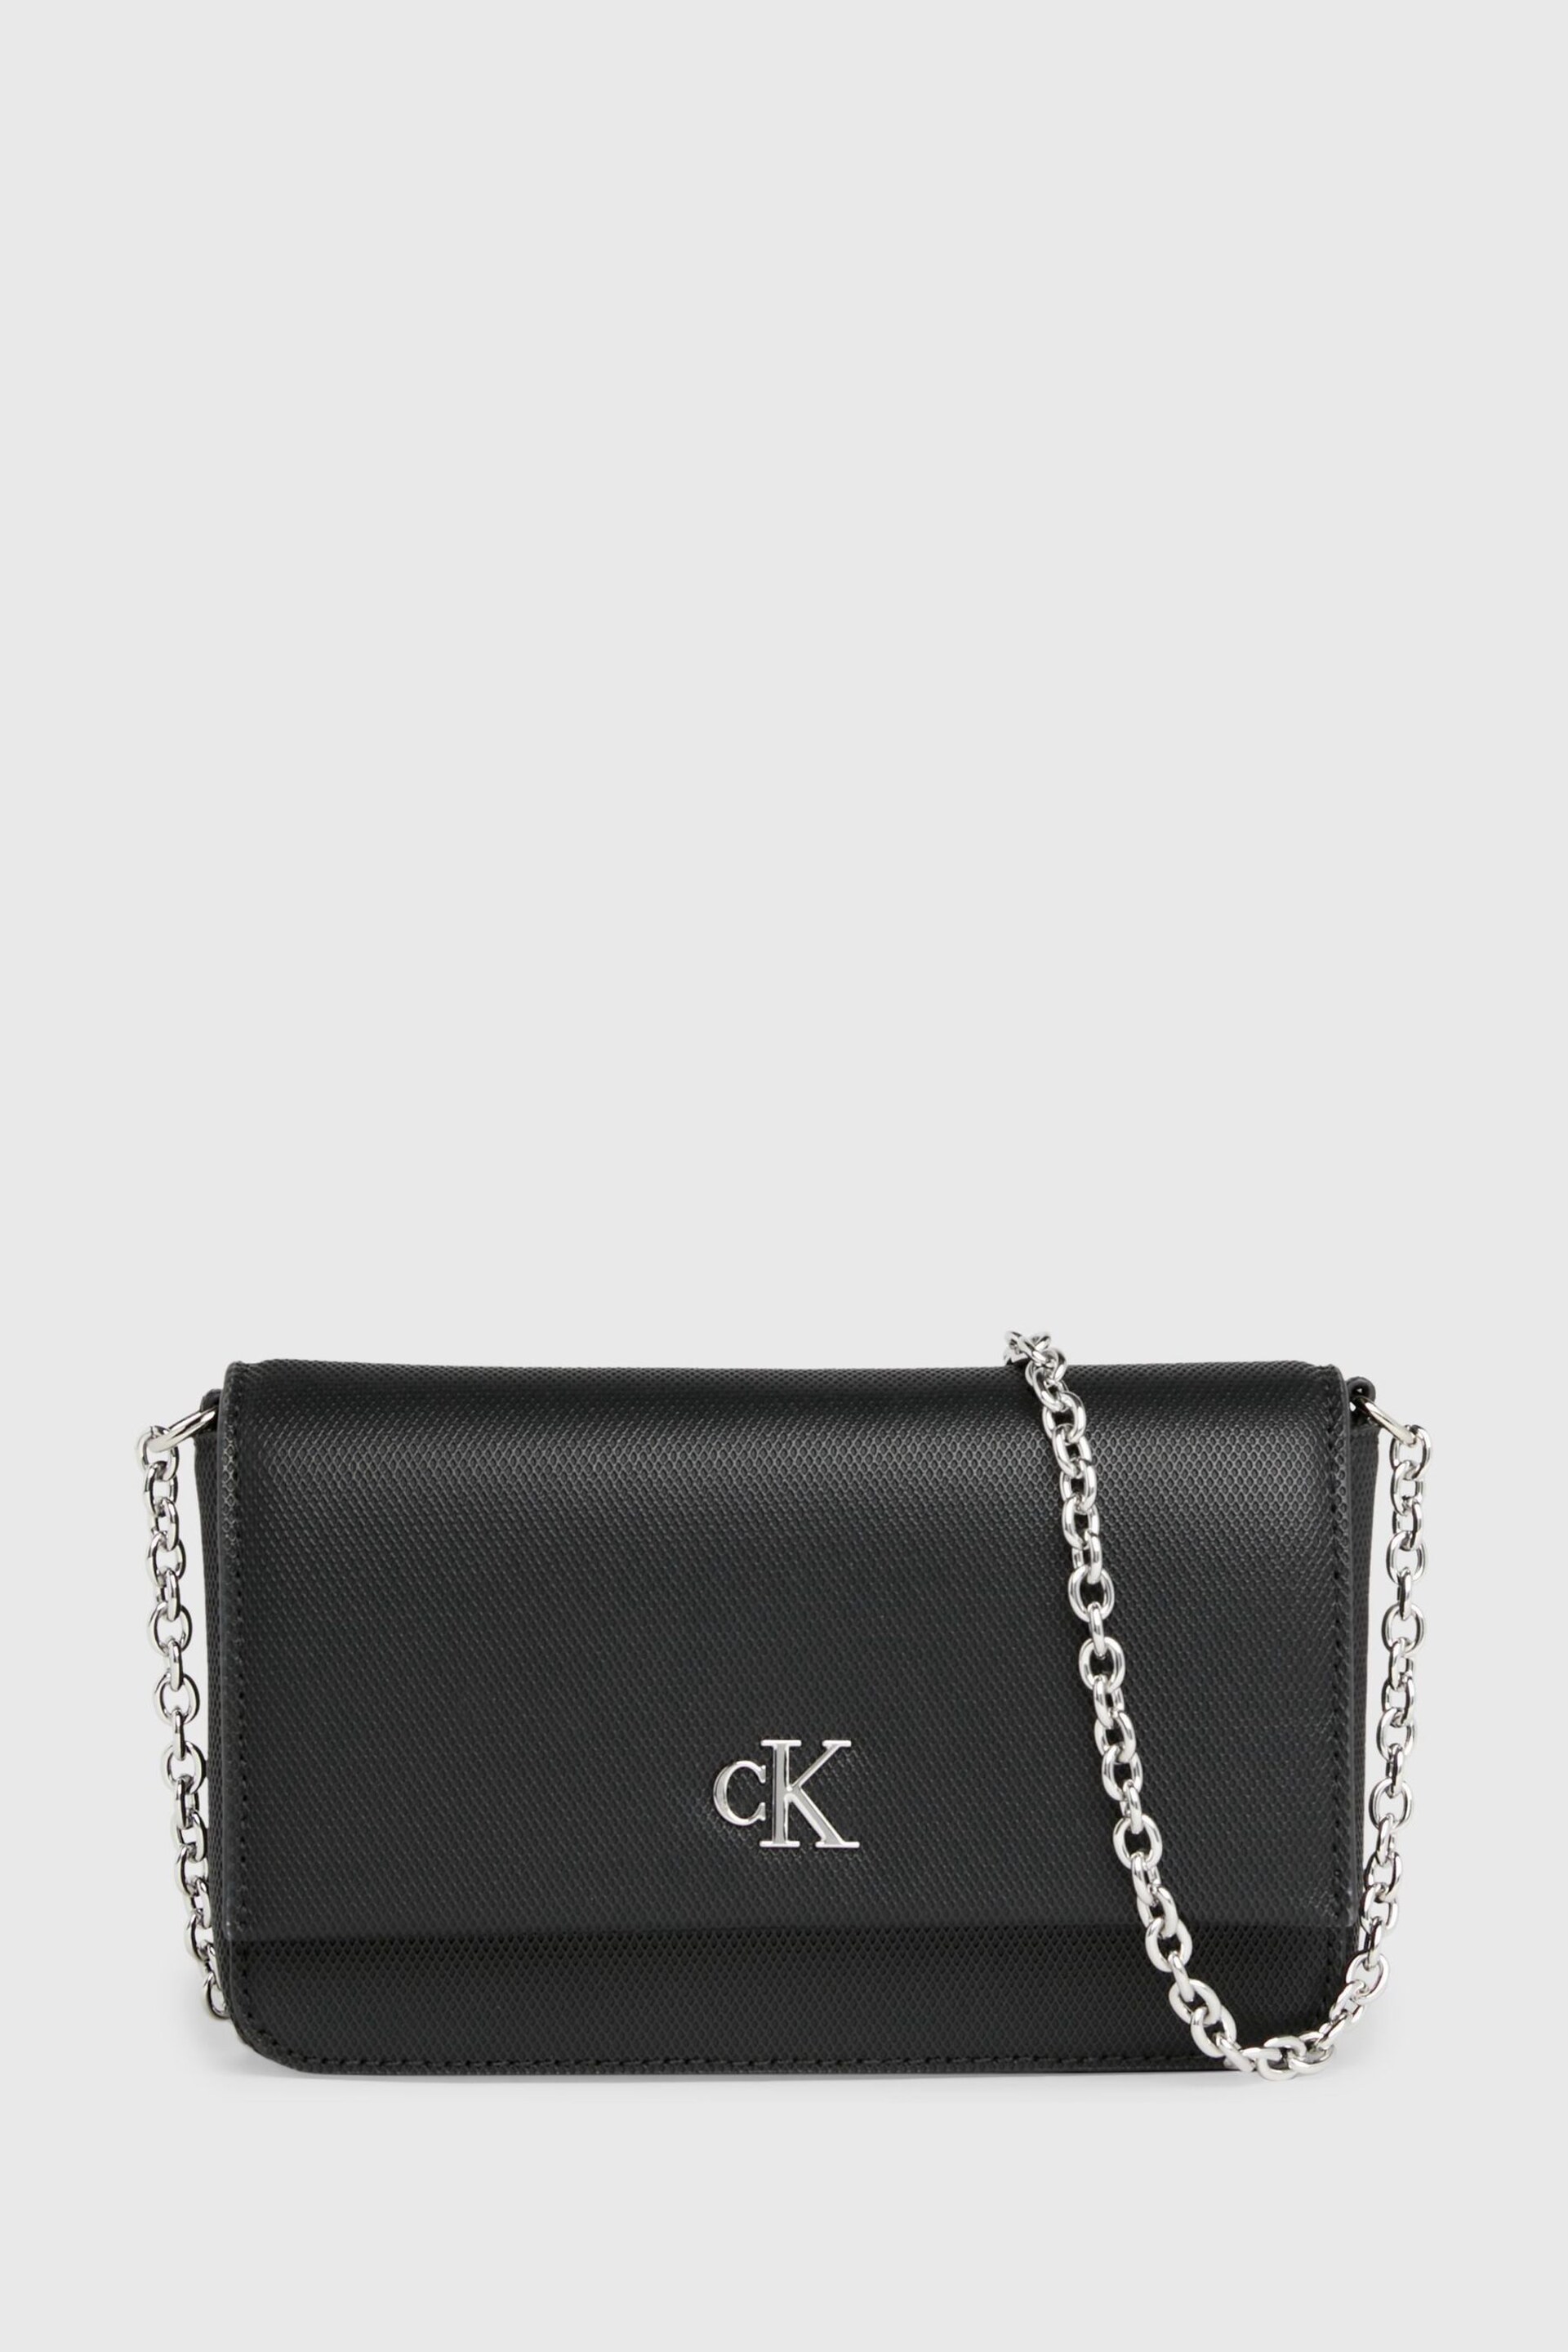 Calvin Klein Black Logo Monogram Chain Bag - Image 2 of 5